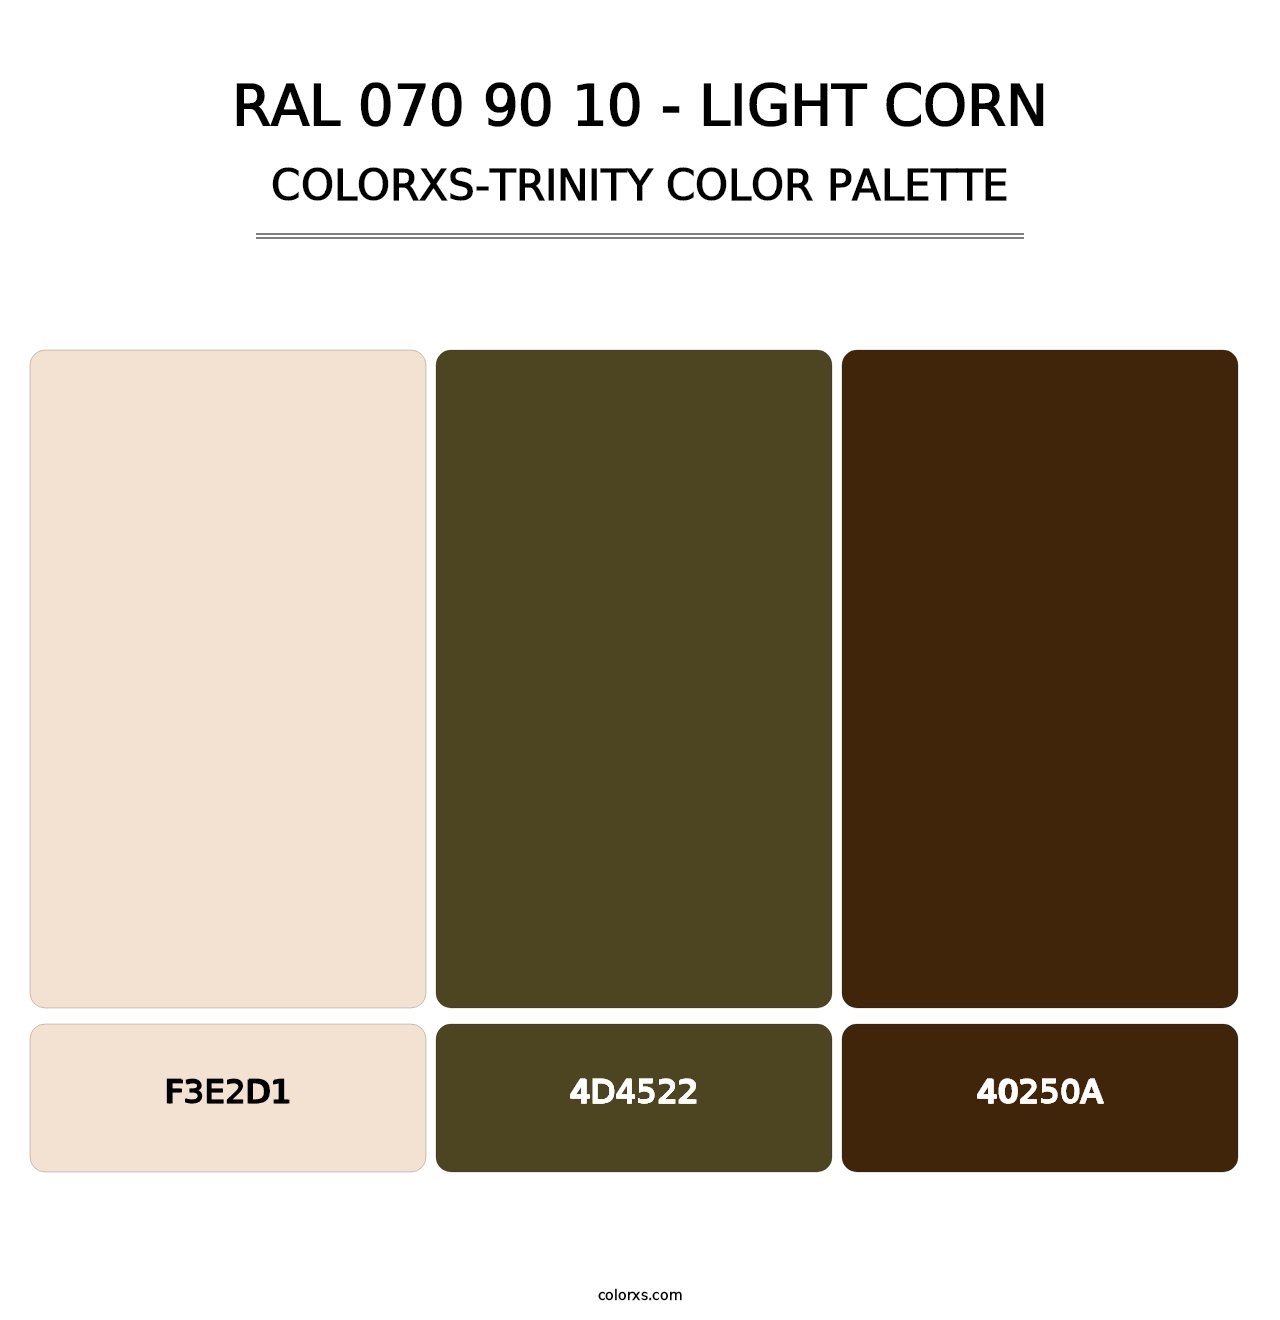 RAL 070 90 10 - Light Corn - Colorxs Trinity Palette